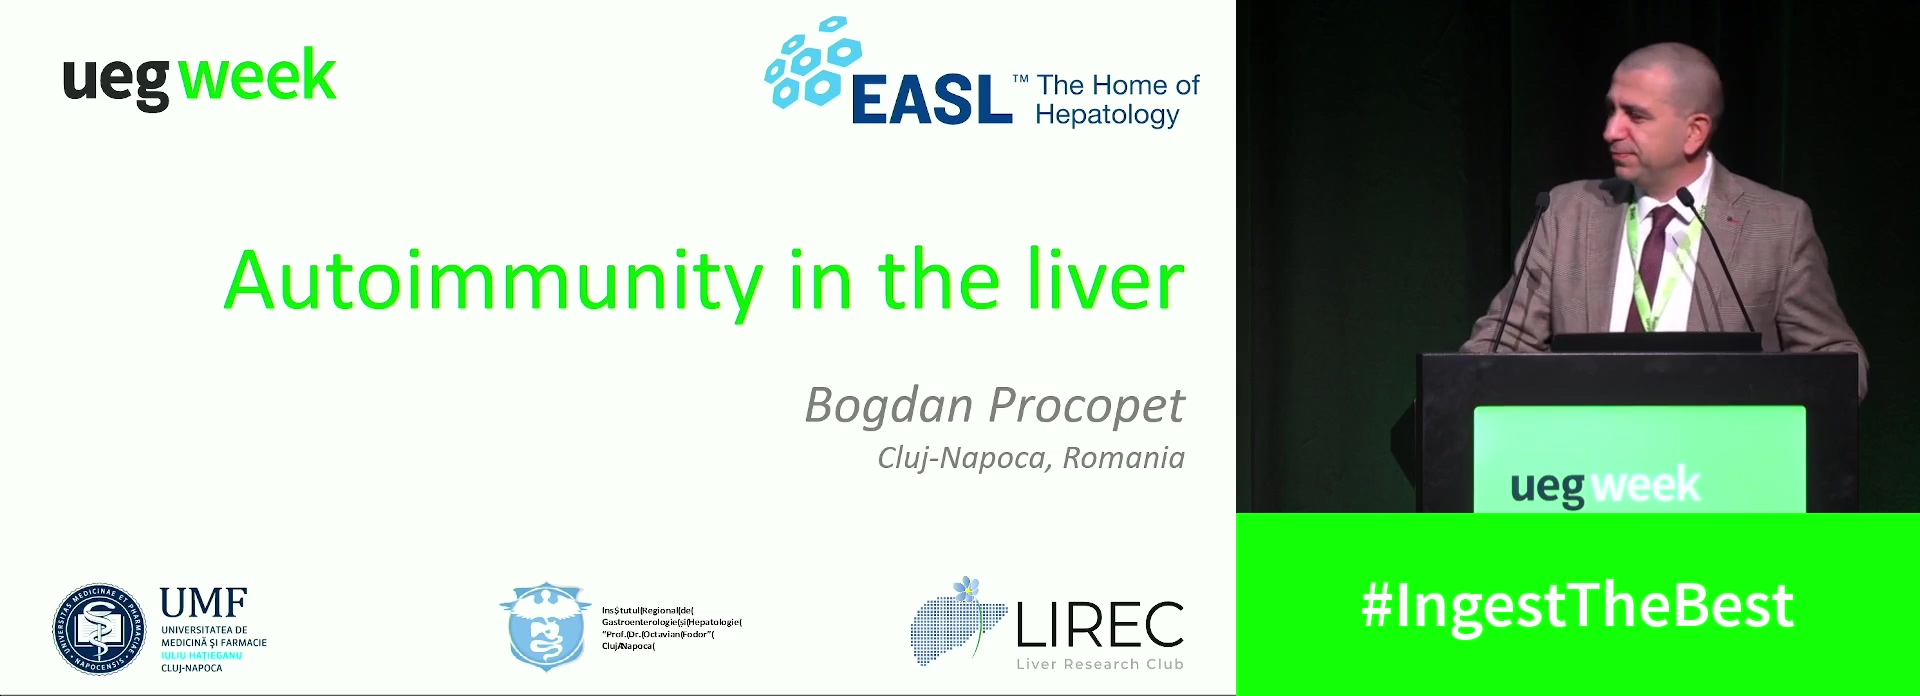 Autoimmunity in the liver